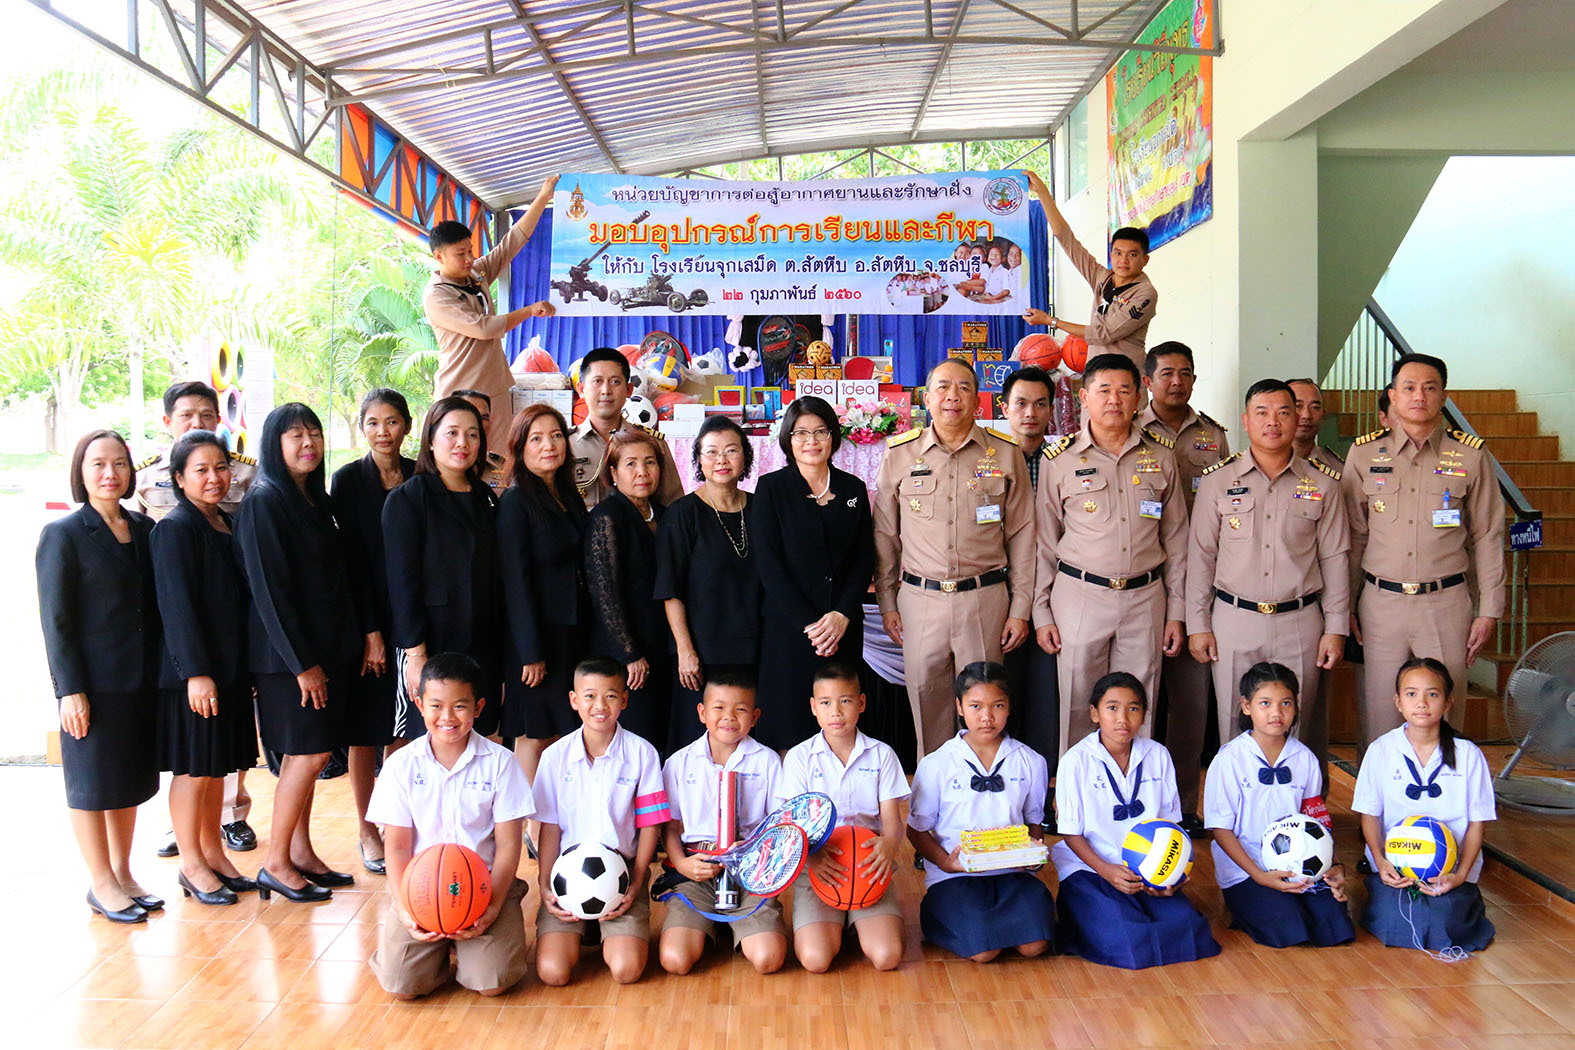 The Royal Thai Navy donated sports and education equipment Juksamet School.